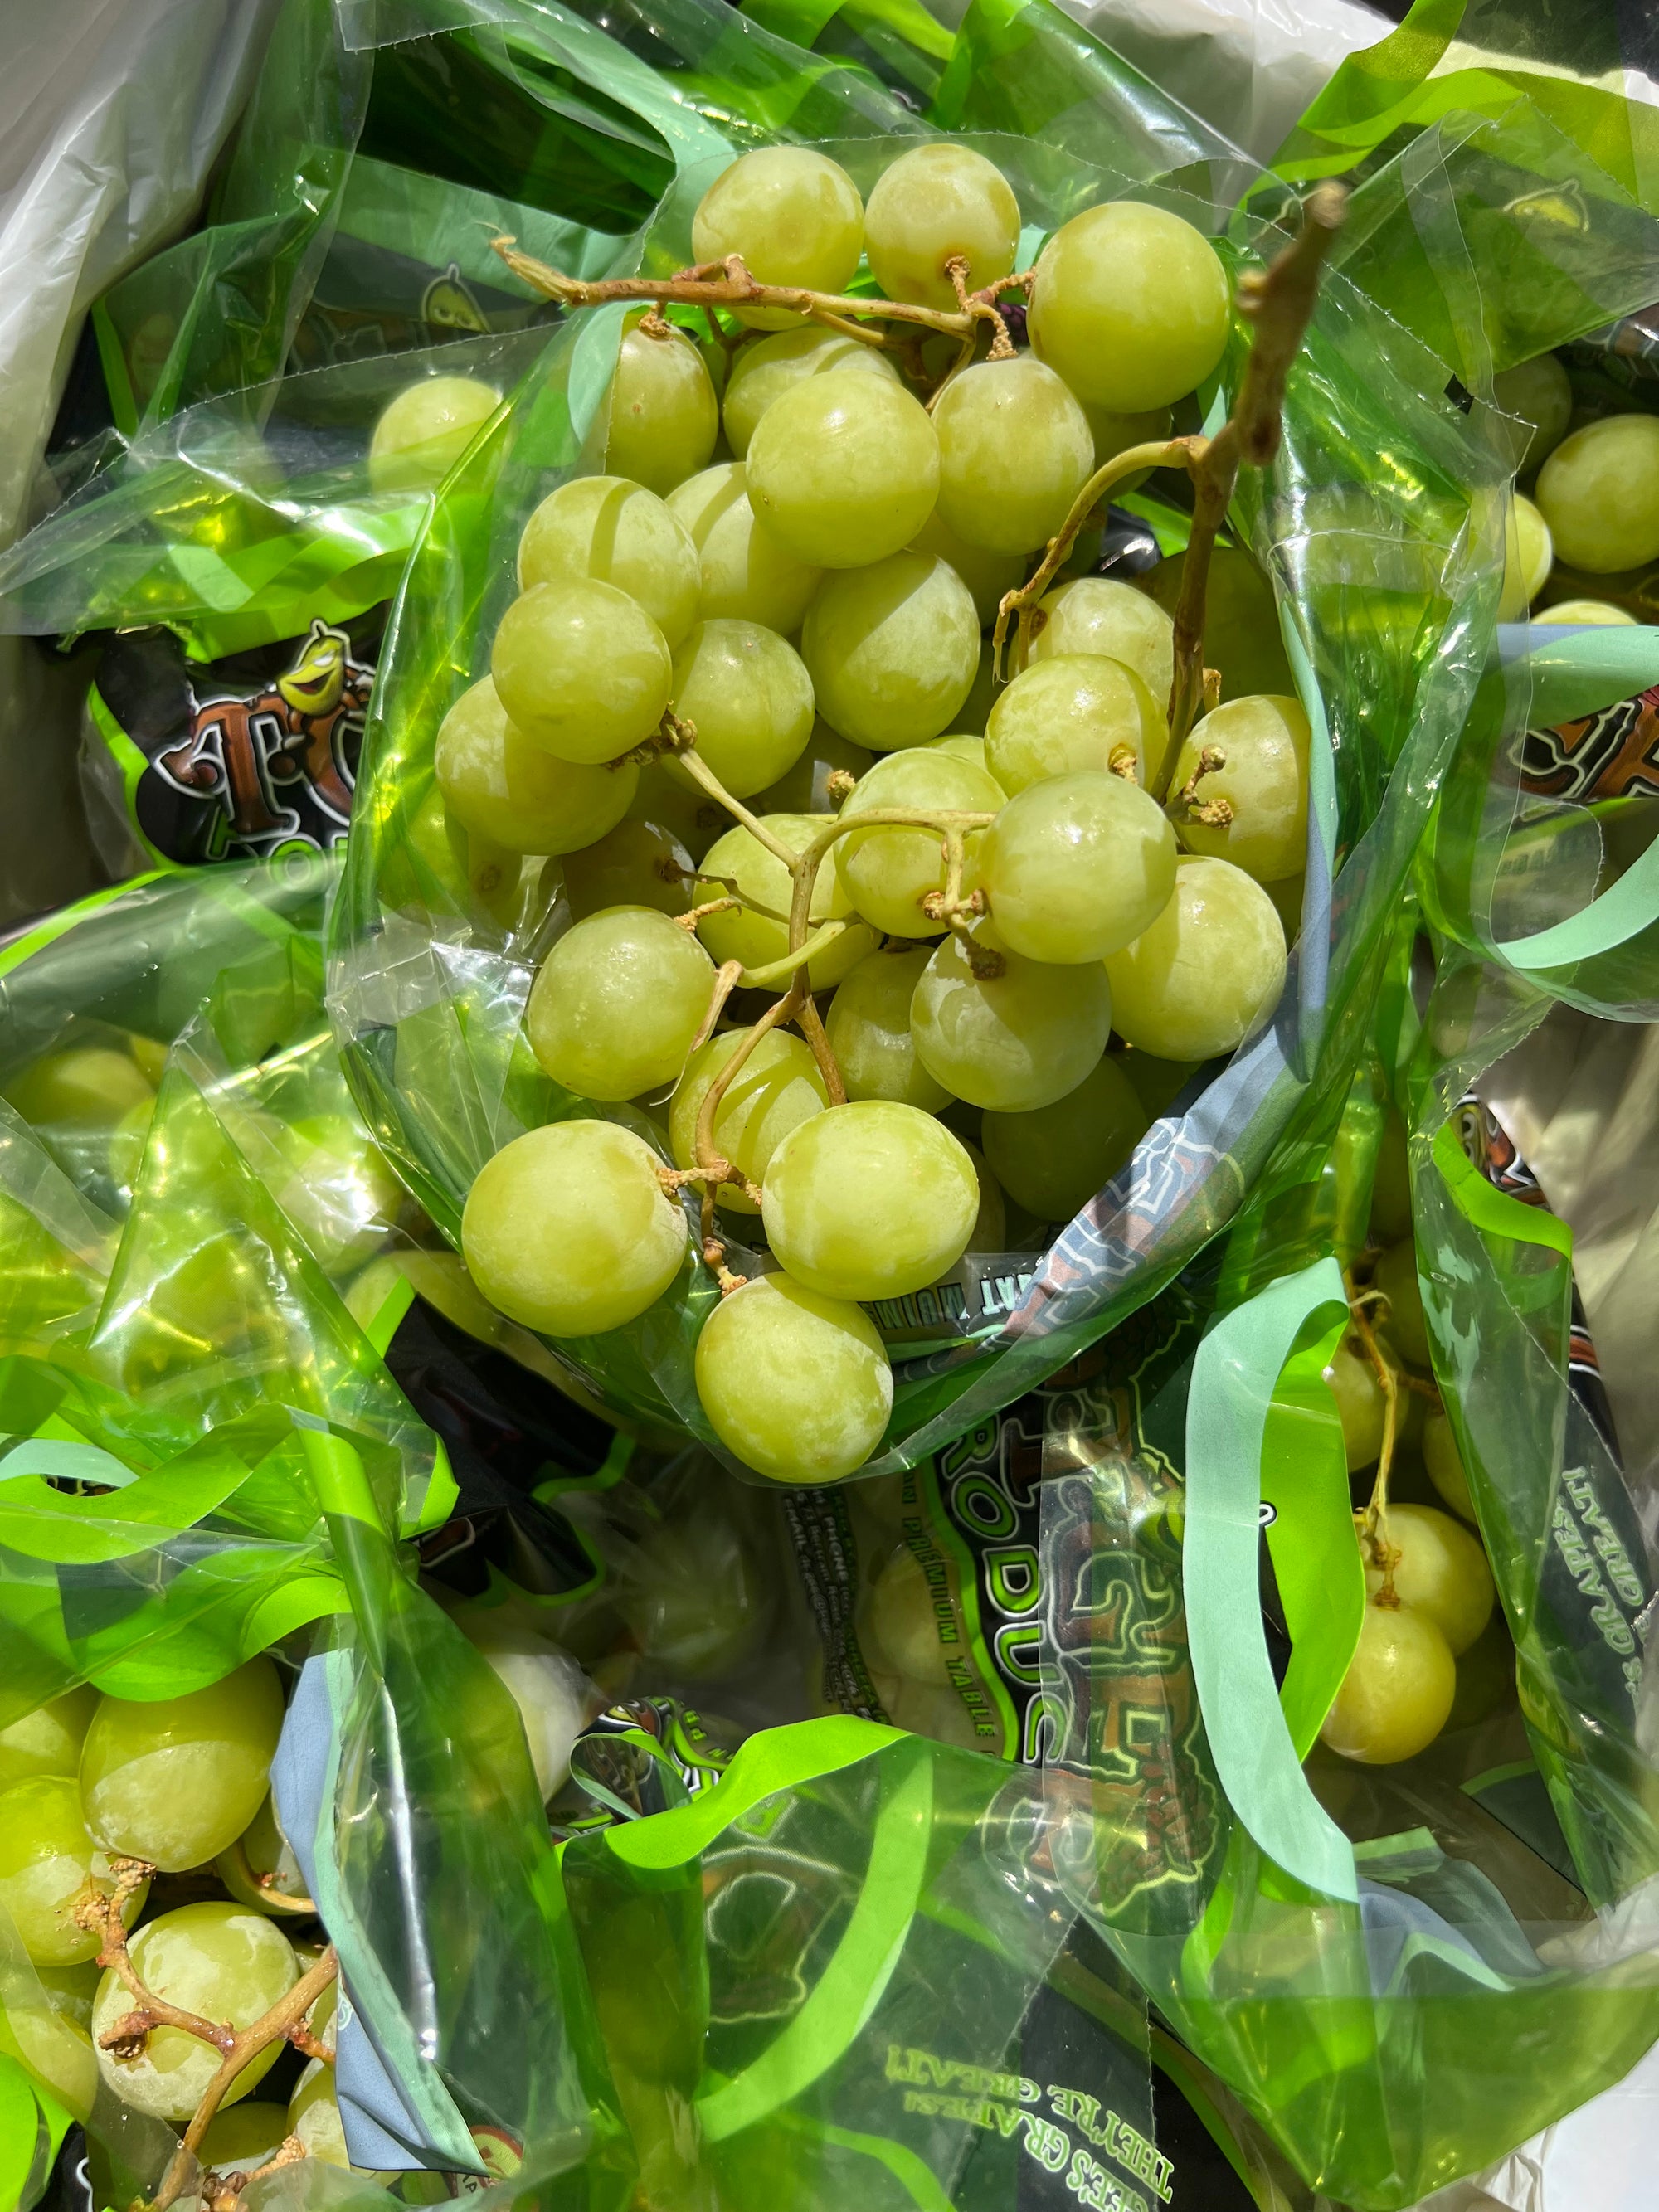 Premium Aussie Green Table Grapes